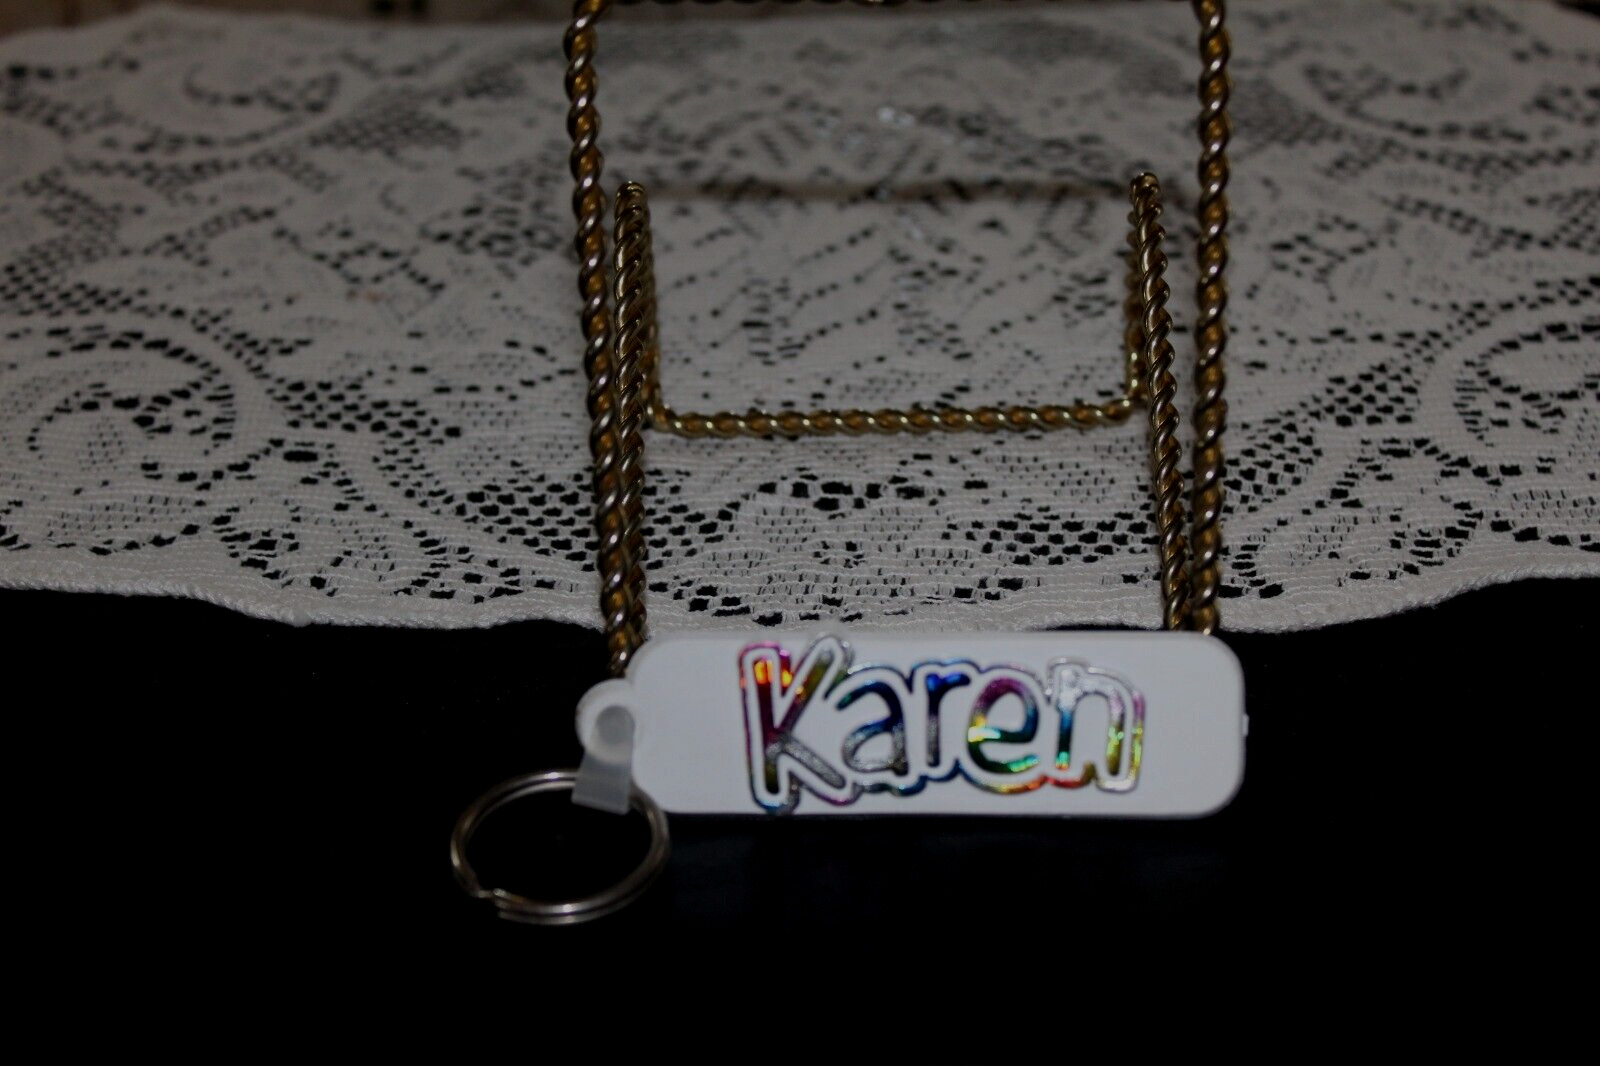 Karen Personalized Keychain/Key Ring